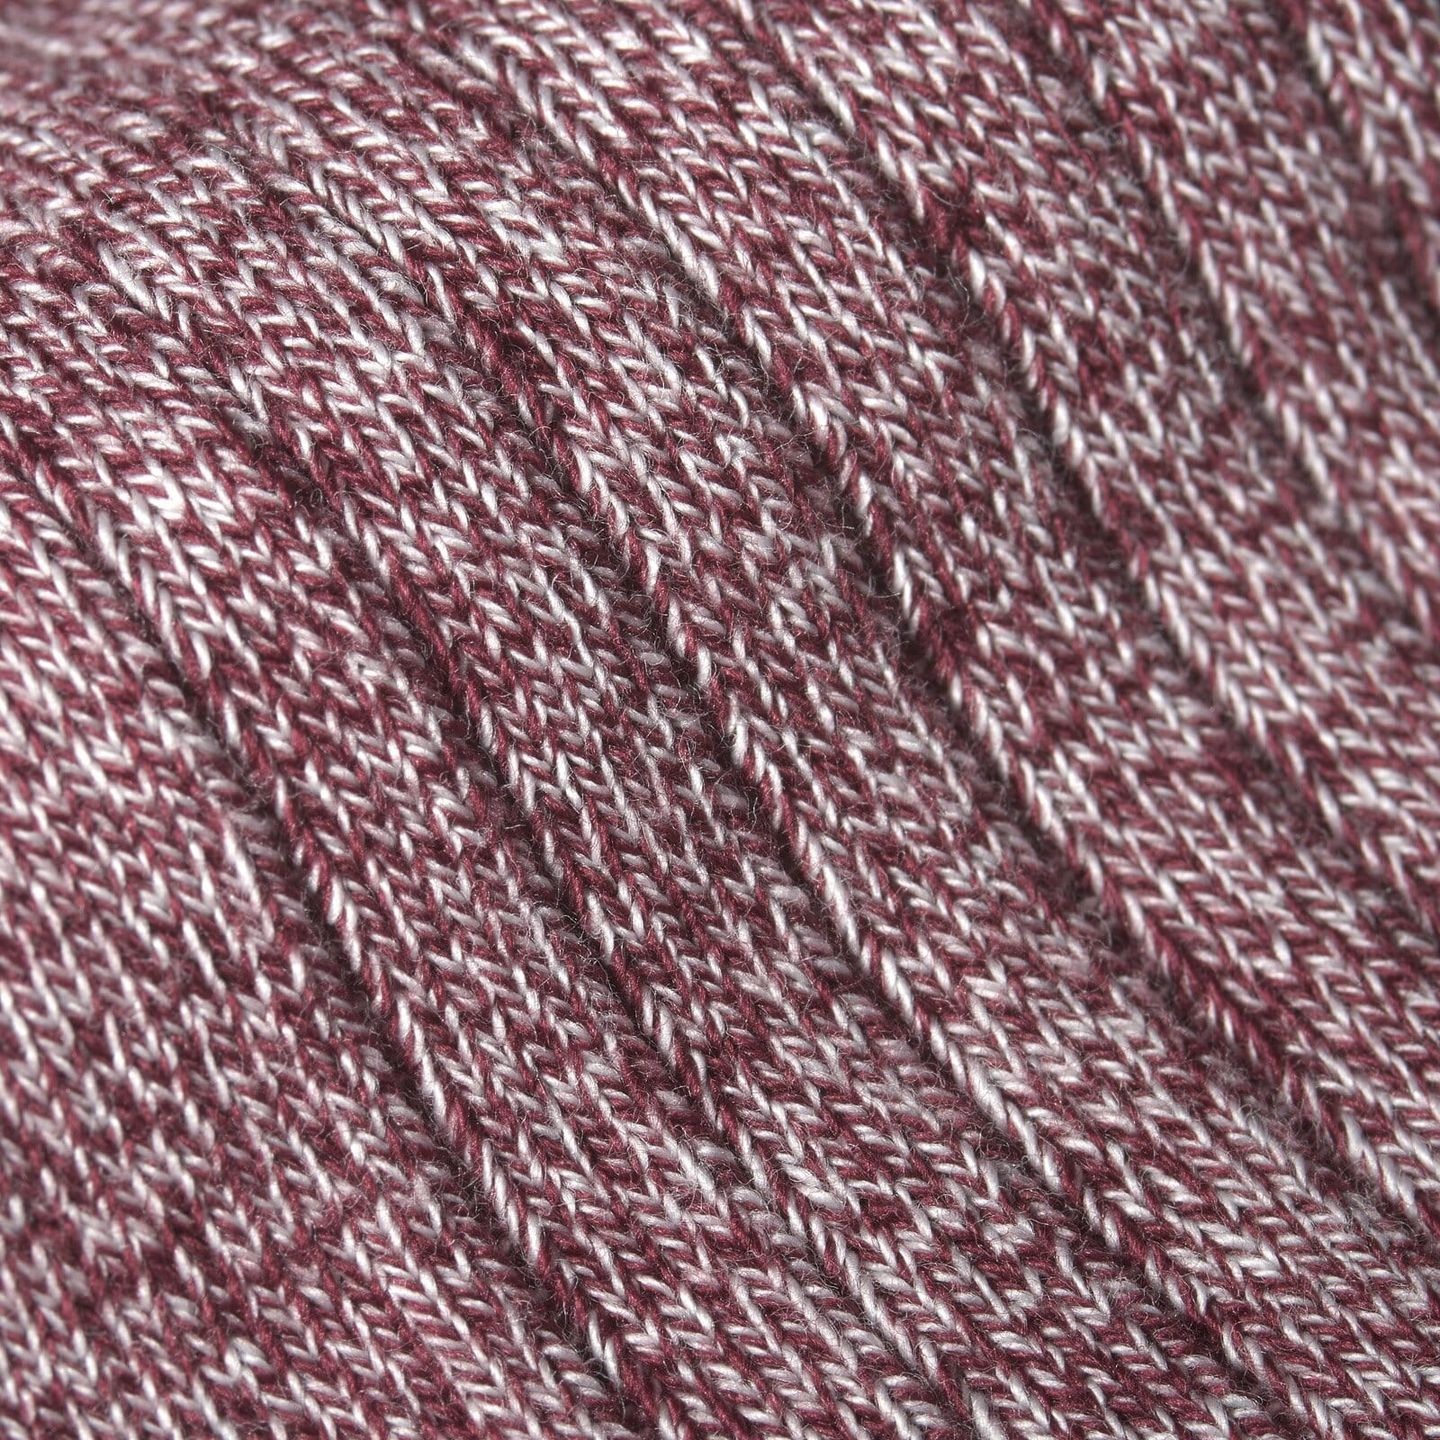 Close up of burgundy and white marl socks